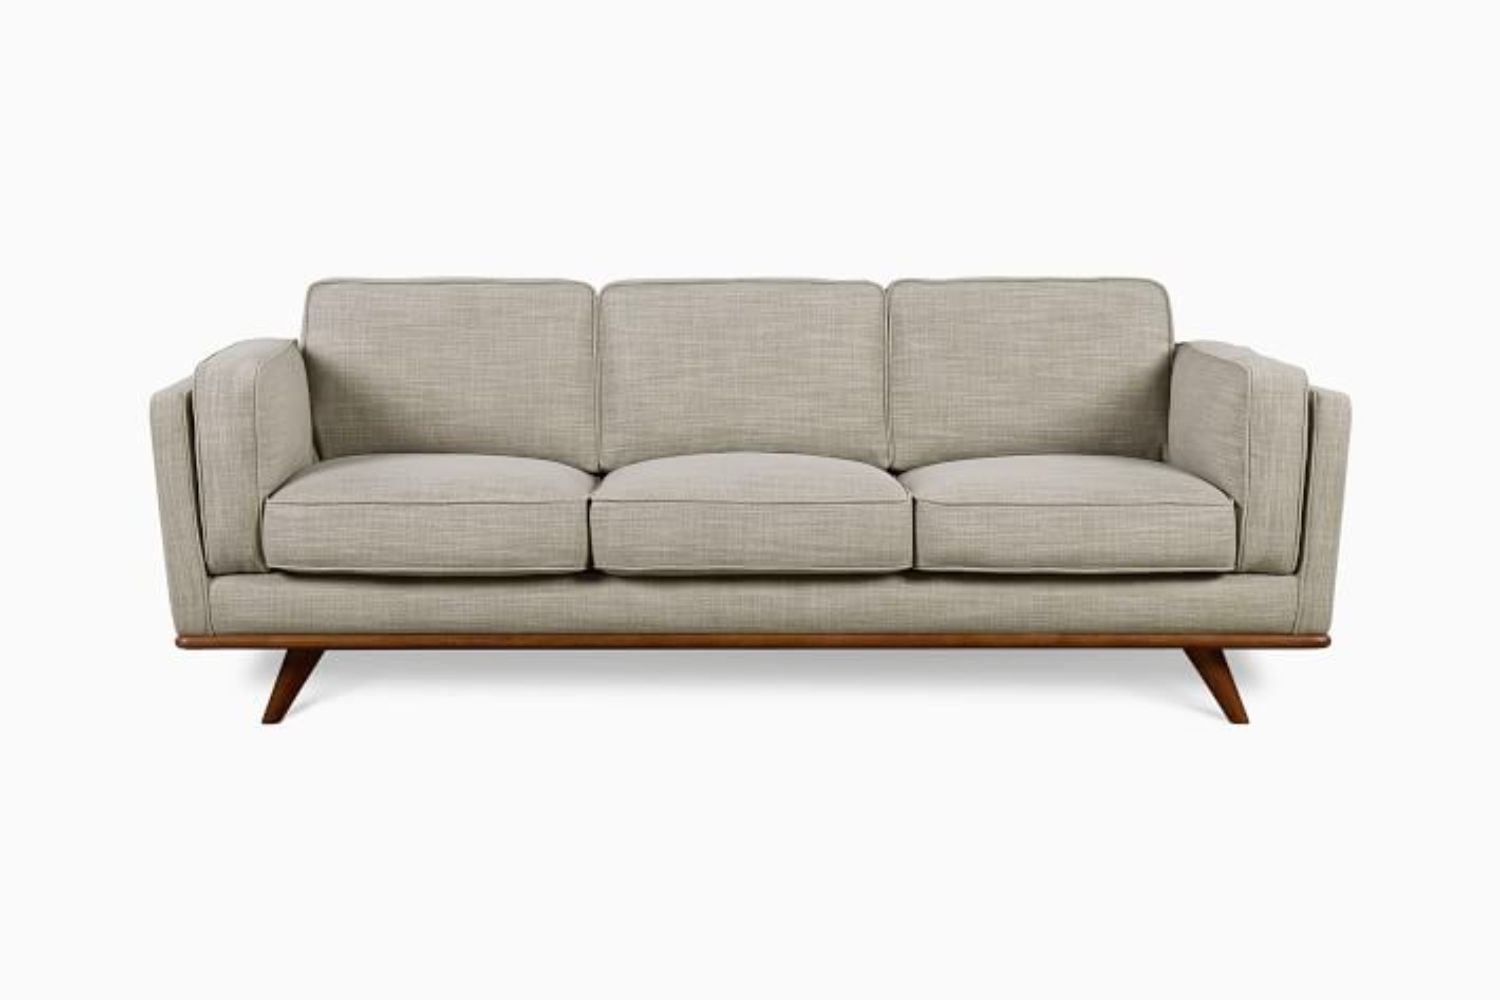 The Best Sofa Brands Option: West Elm